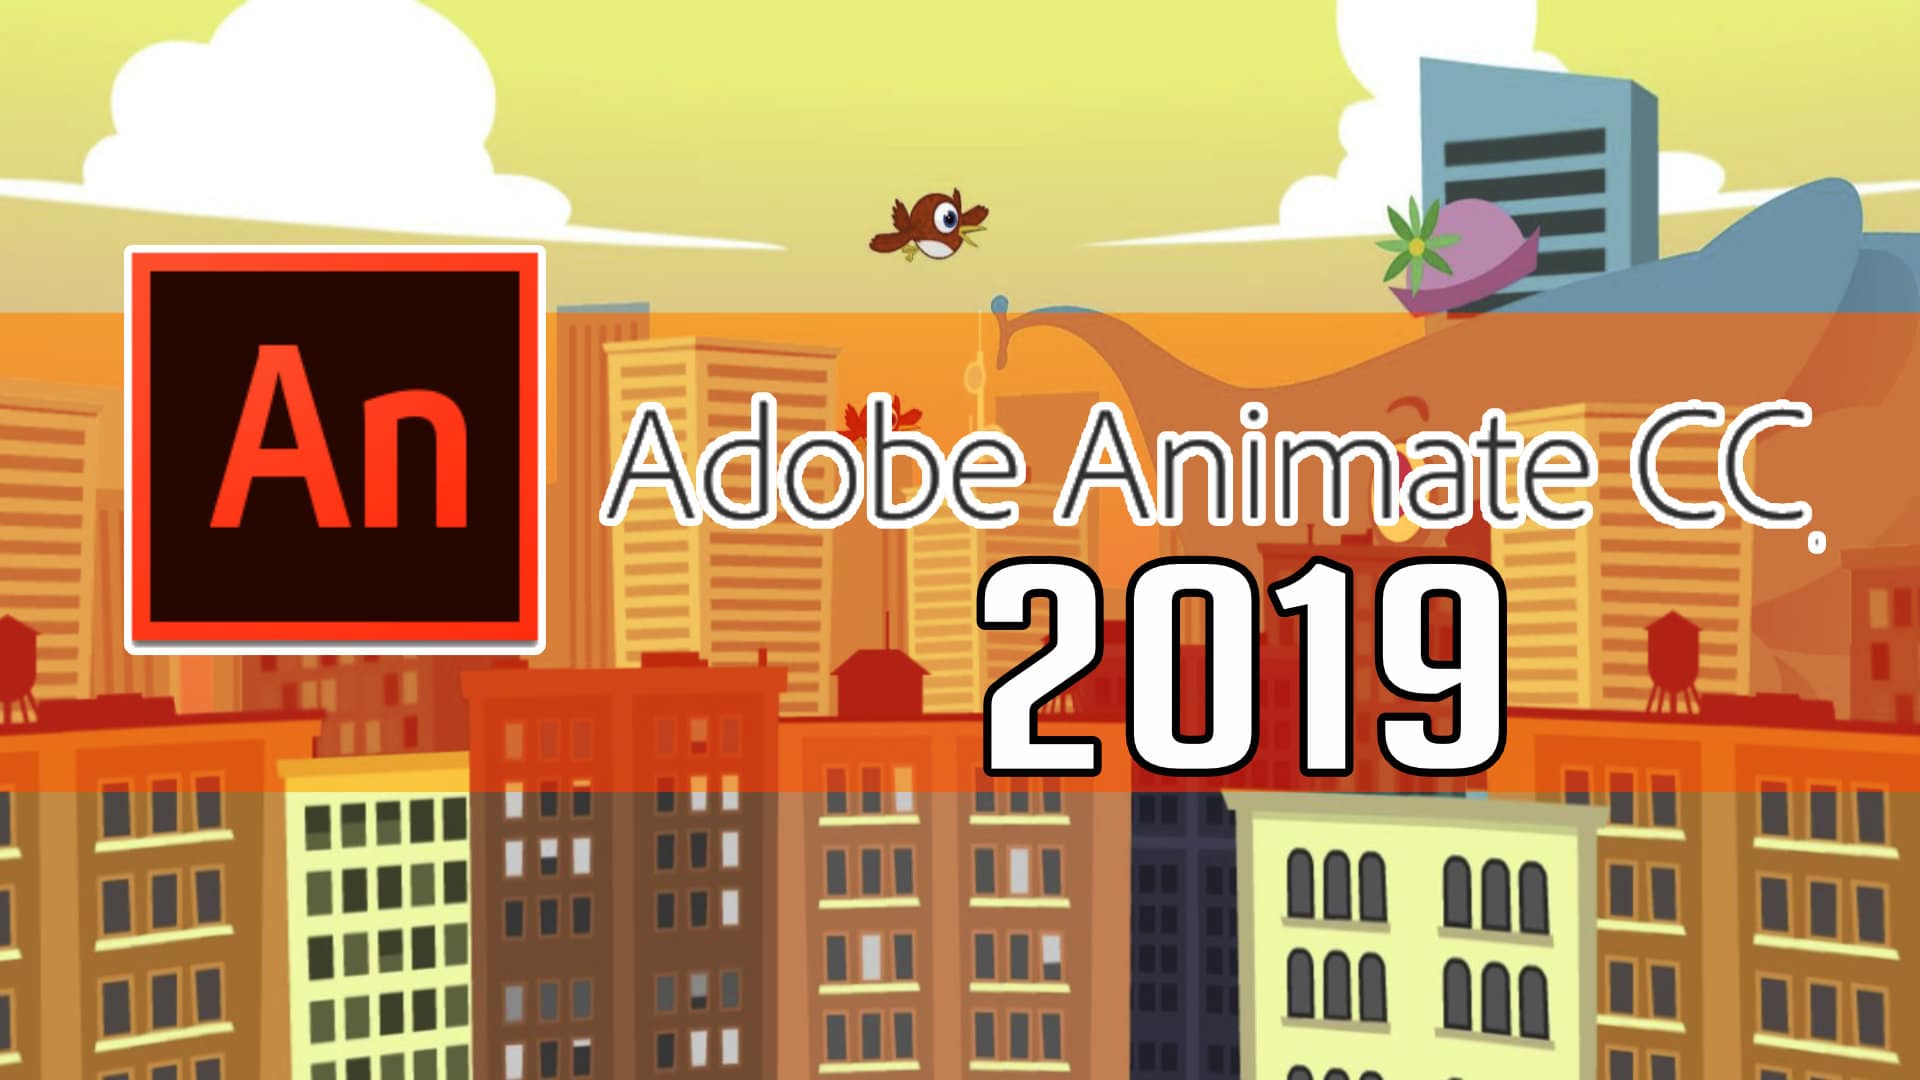 Adobe Animate CC 2019 Released – 